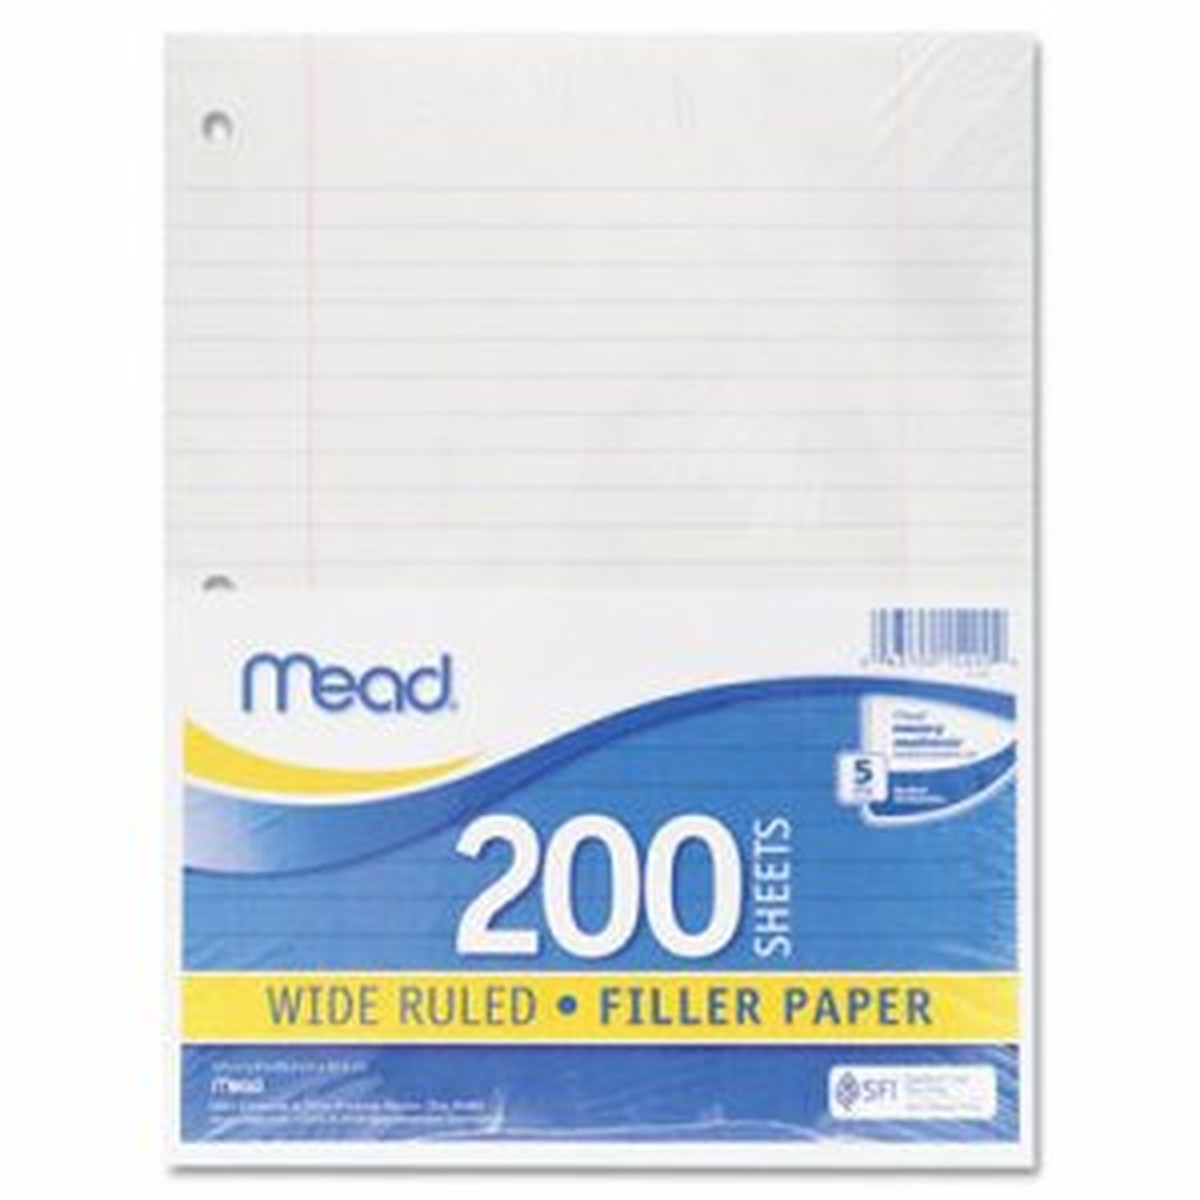 Filler Paper, Wide Ruled, 10 1/2" x 8", 200 Sheets